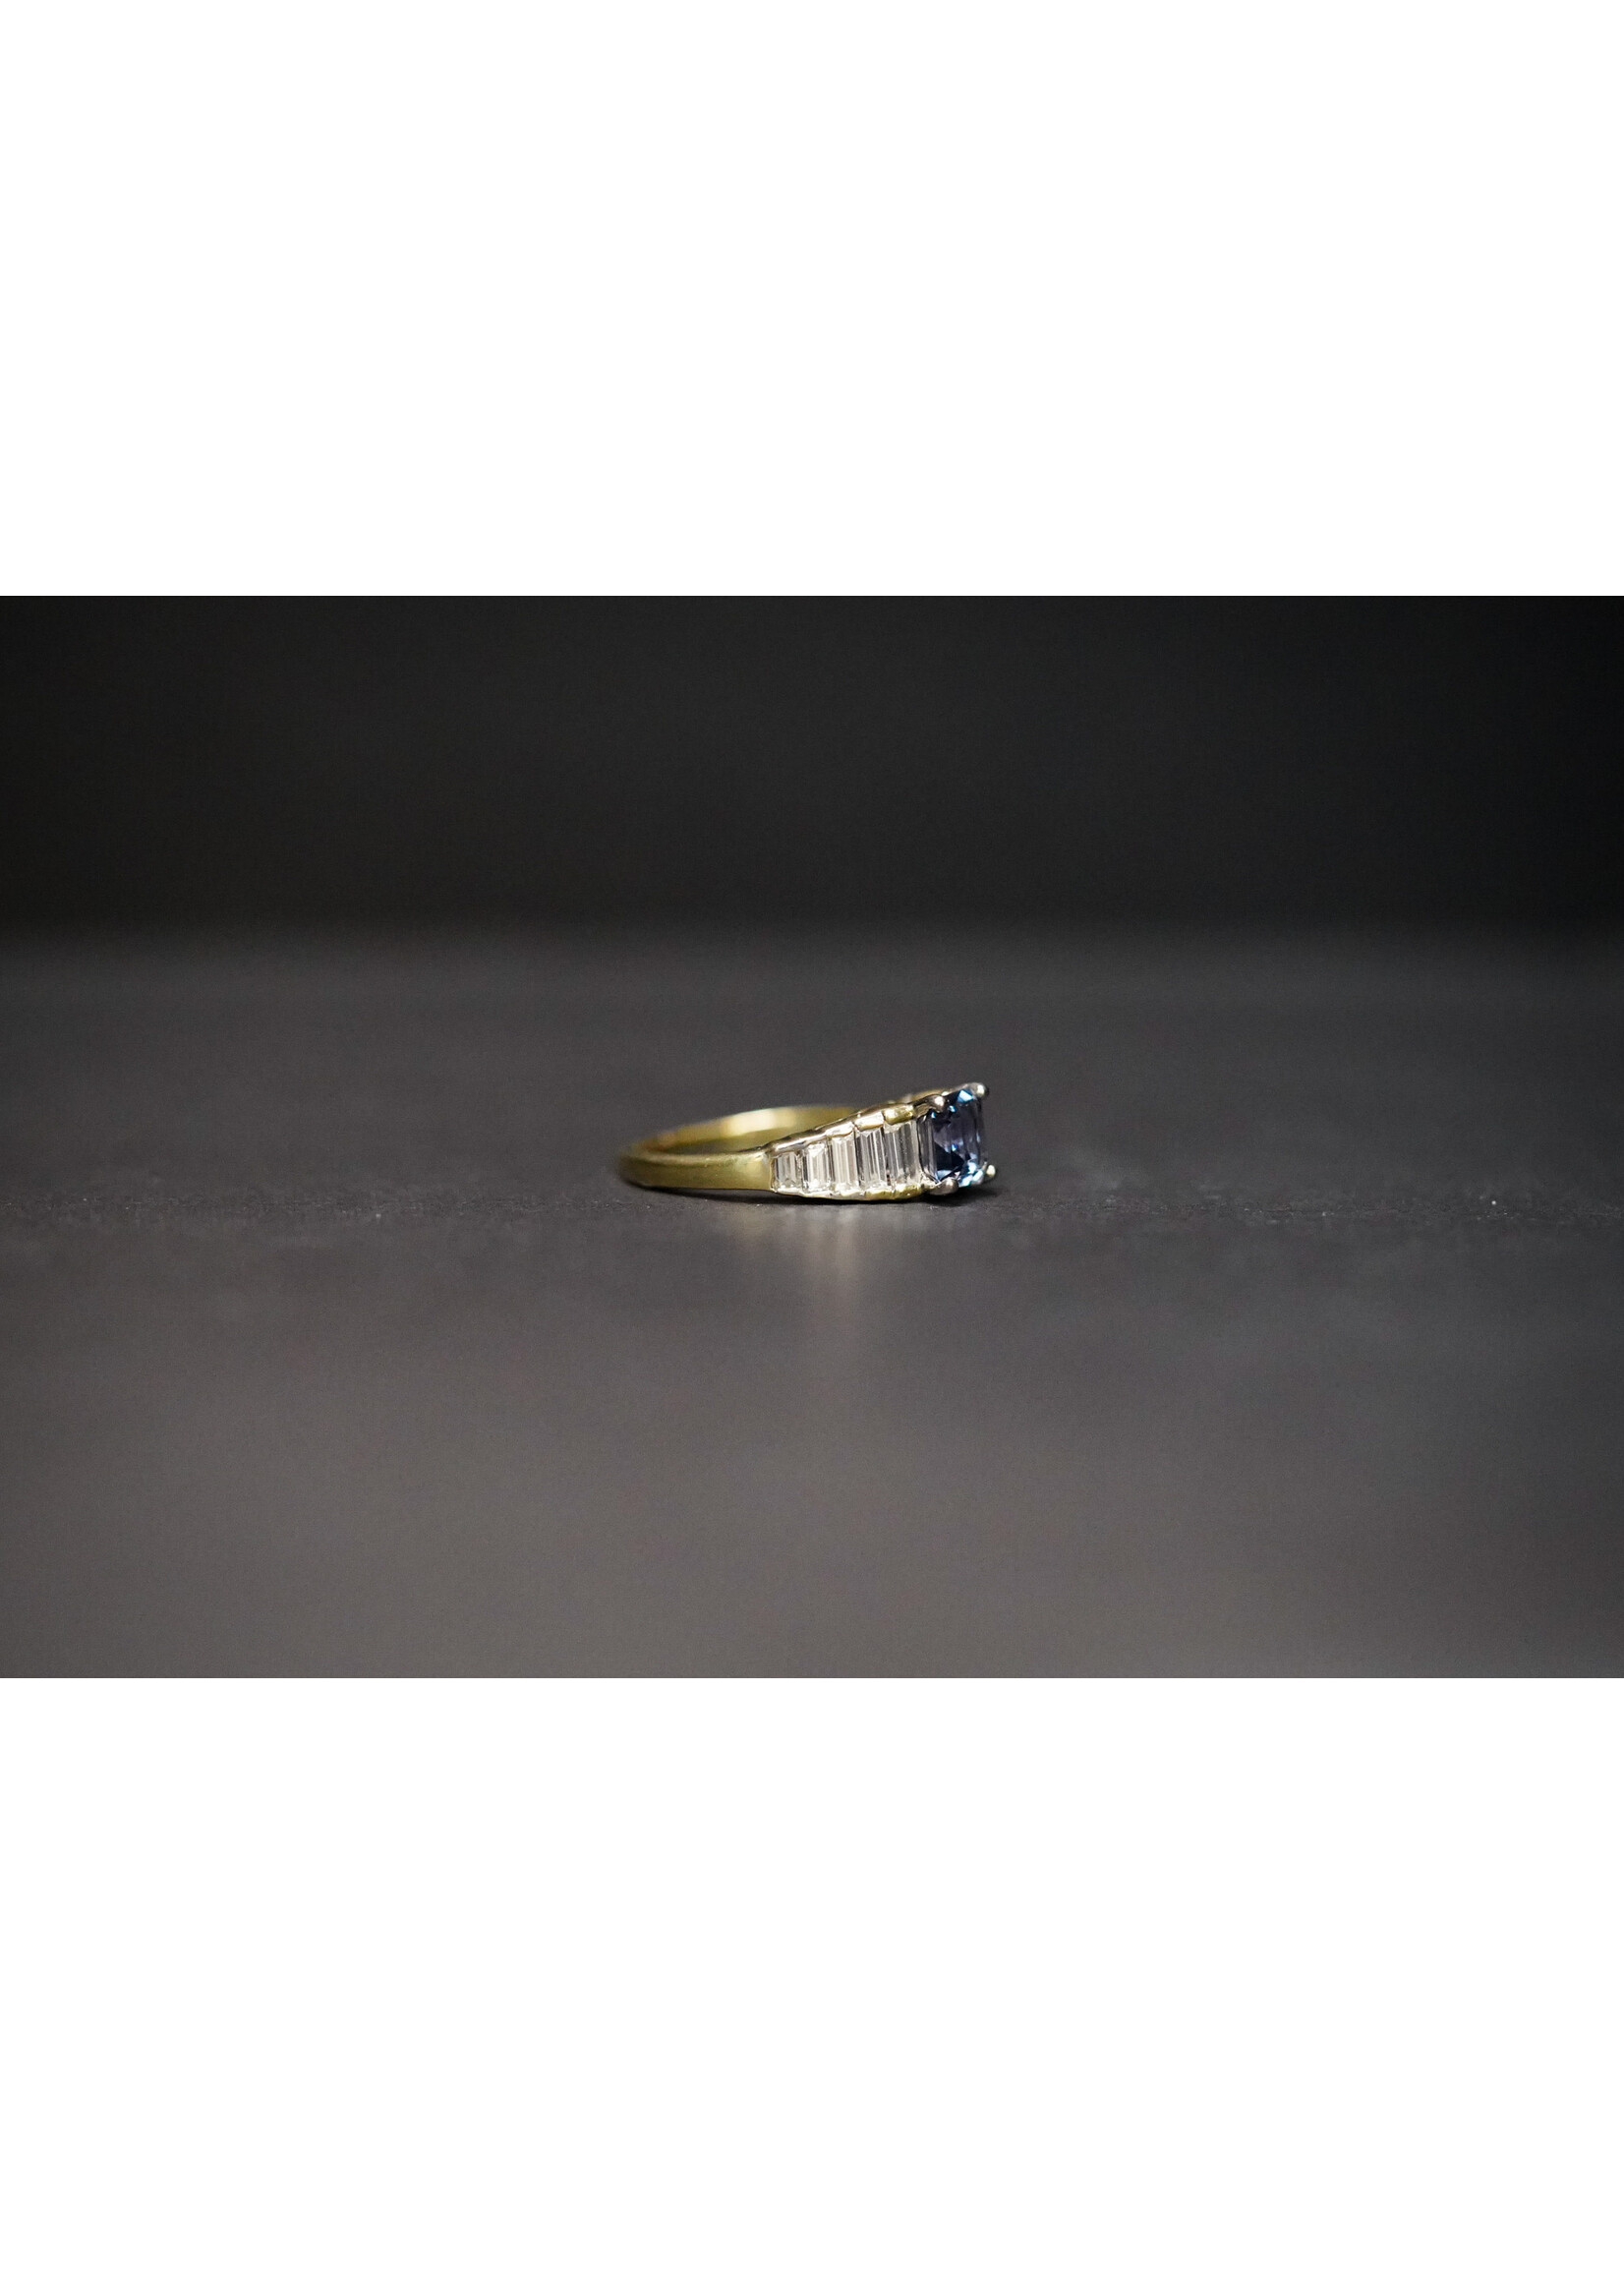 18KWY 4.25g 2.05ctw (1.17ctr) Sapphire & Diamond Fashion Ring (size 6.5)